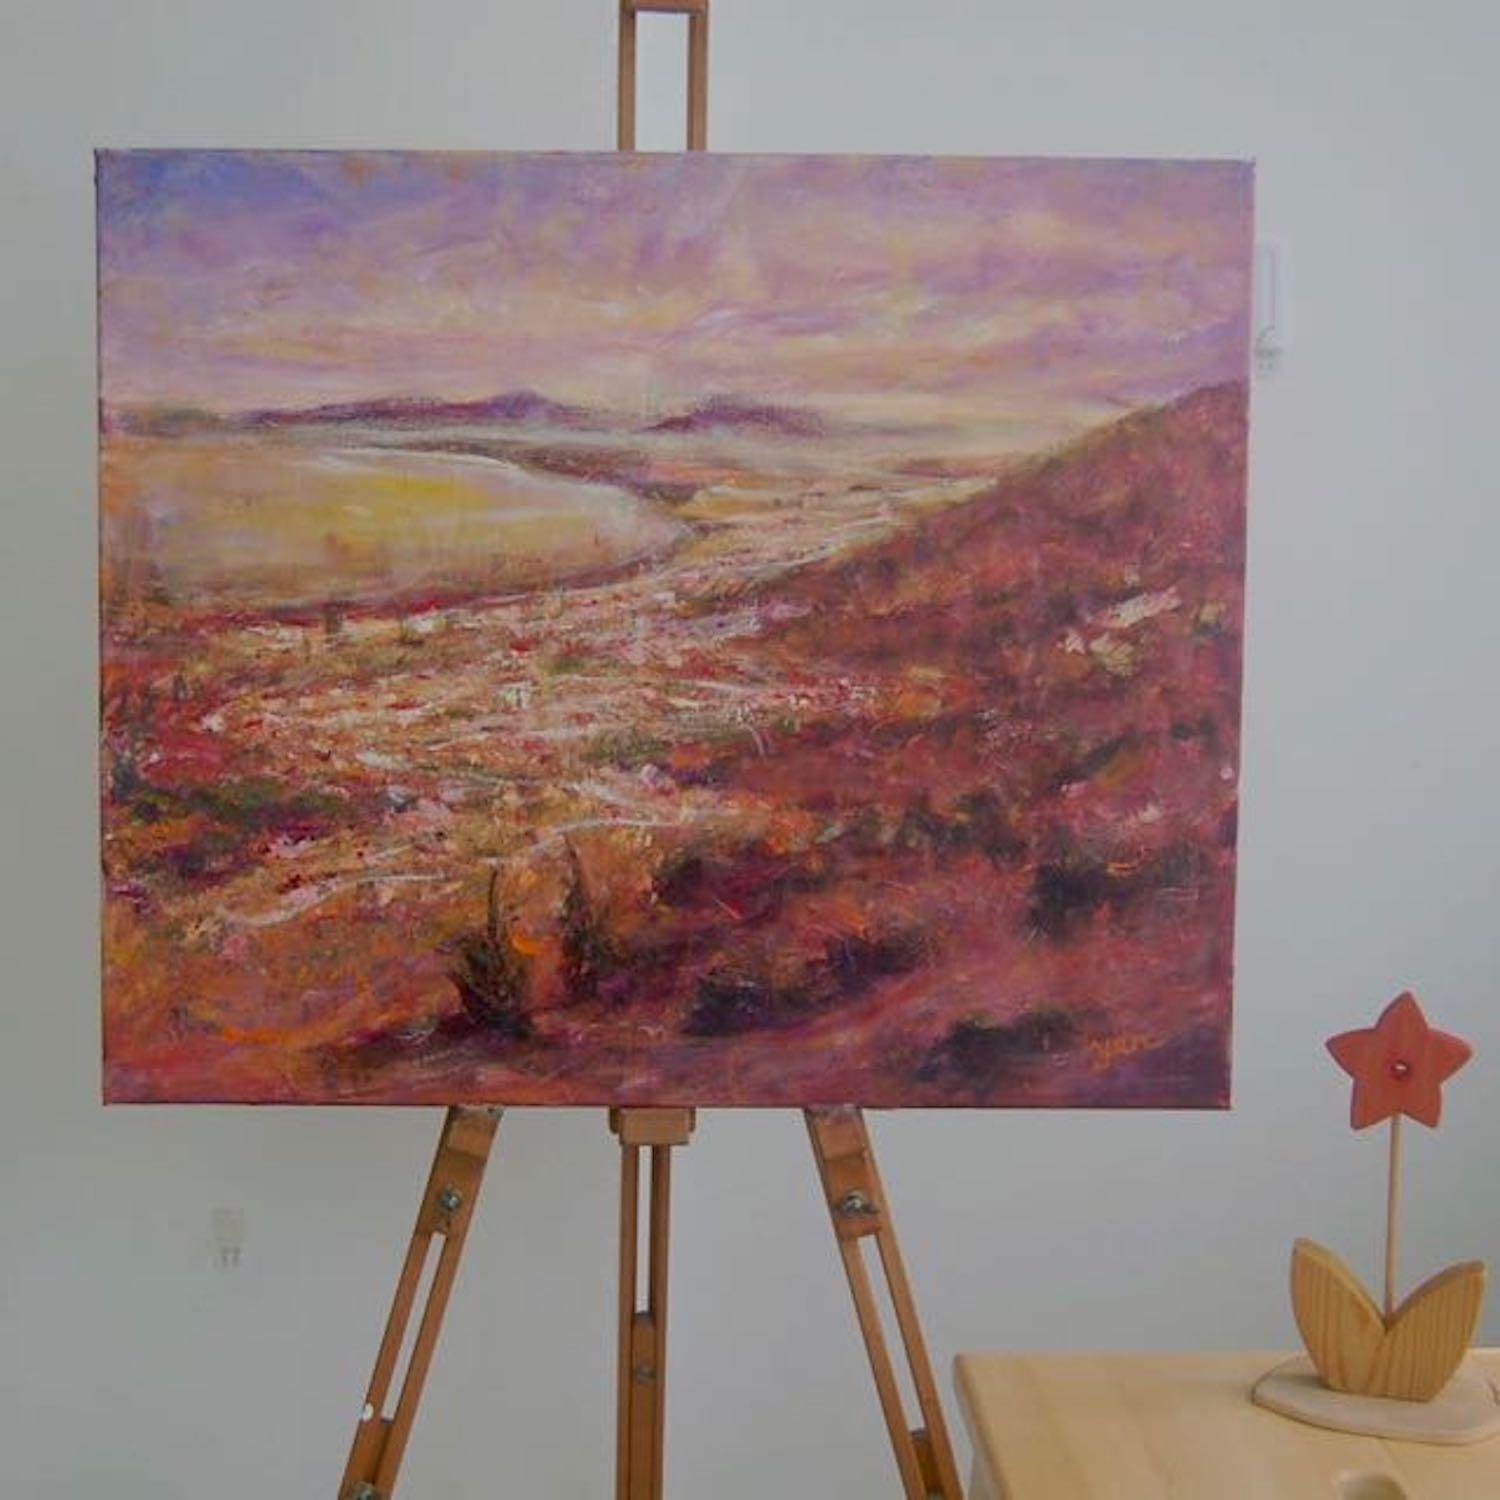 Cape of Hope - Capetown Impressionist Landscape Painting Original Art, South Africa, Scenic Mountain Sunset, Coastal Scenery, Purple, Orange